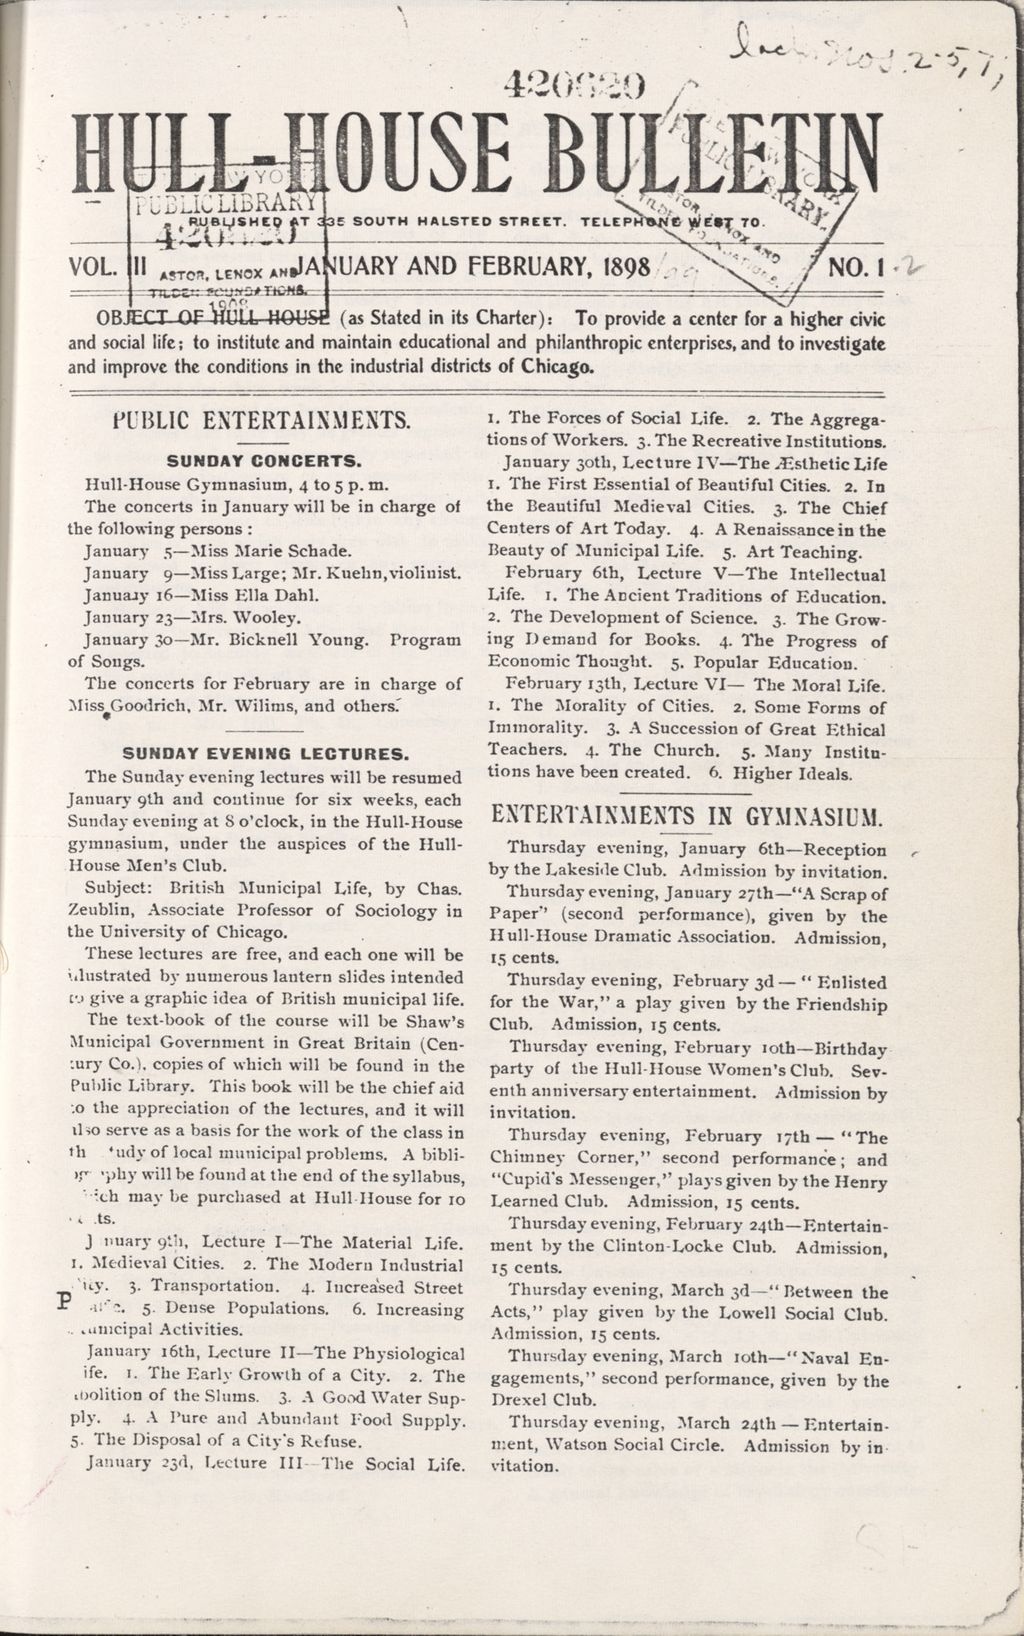 Hull-House Bulletin, vol. 3, no. 1/2 1898: Jan./Feb.